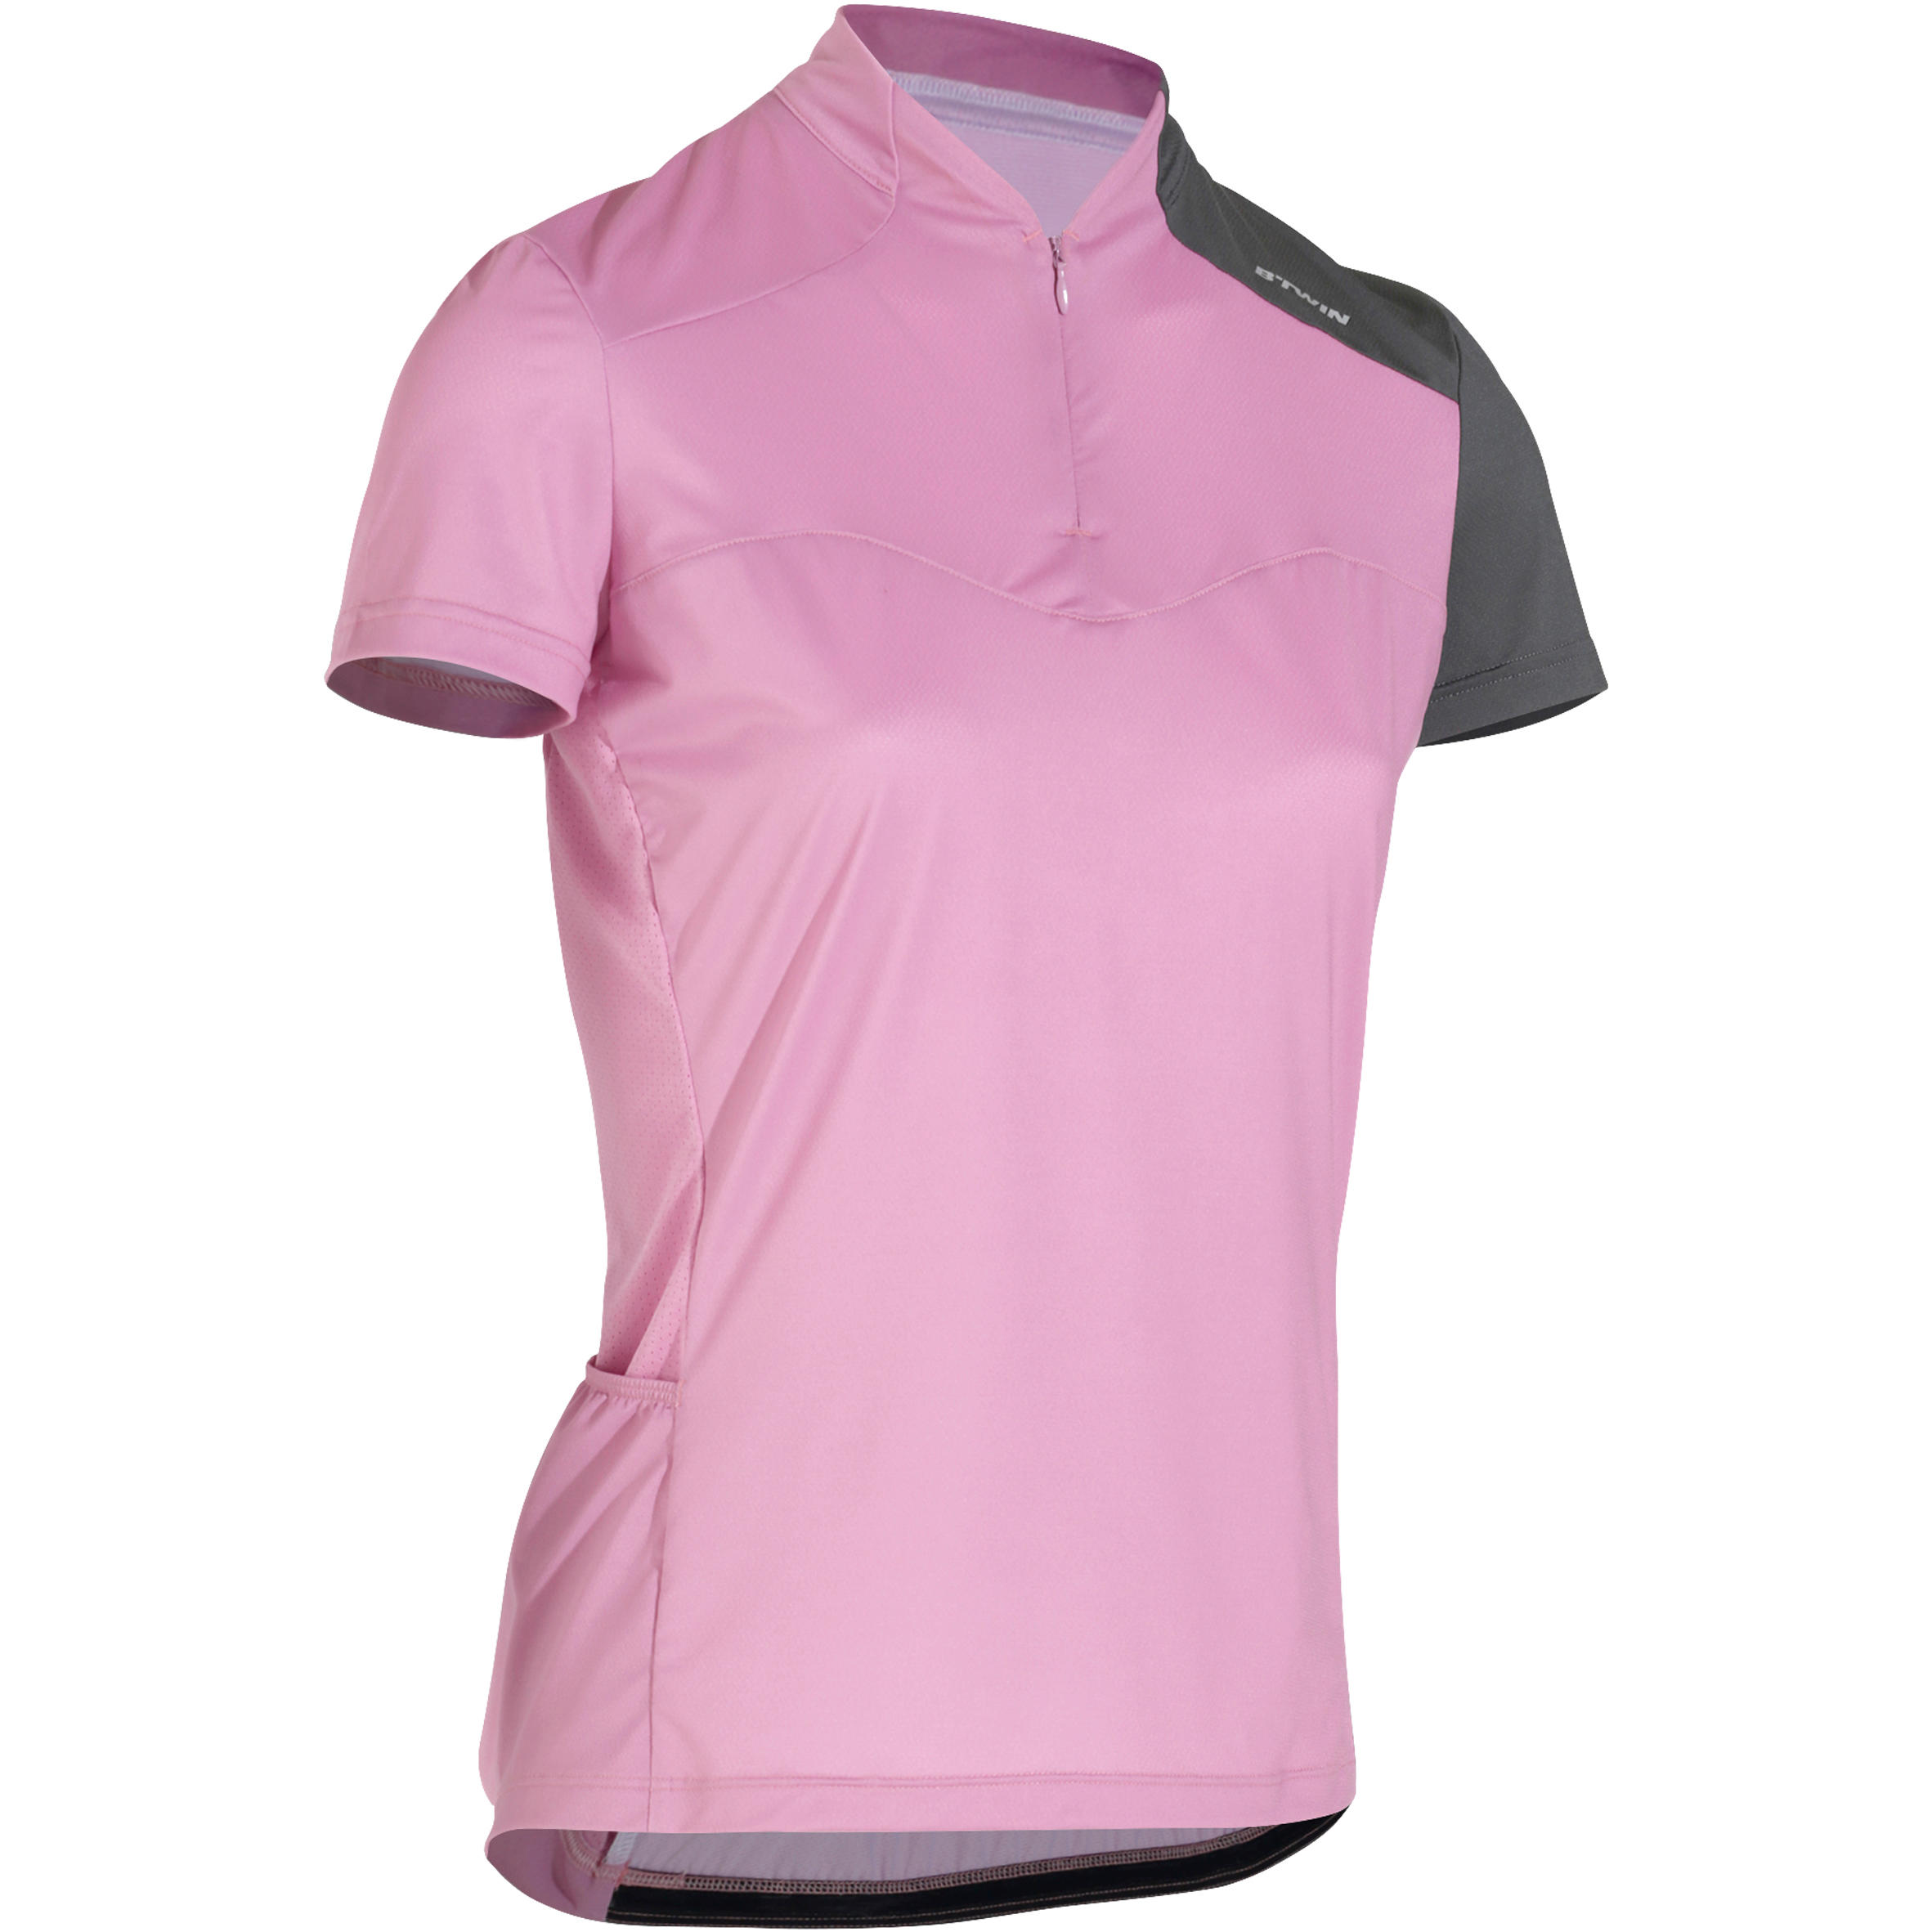 500 Women's Short Sleeve Cycling Jersey - Pink/Grey 1/8